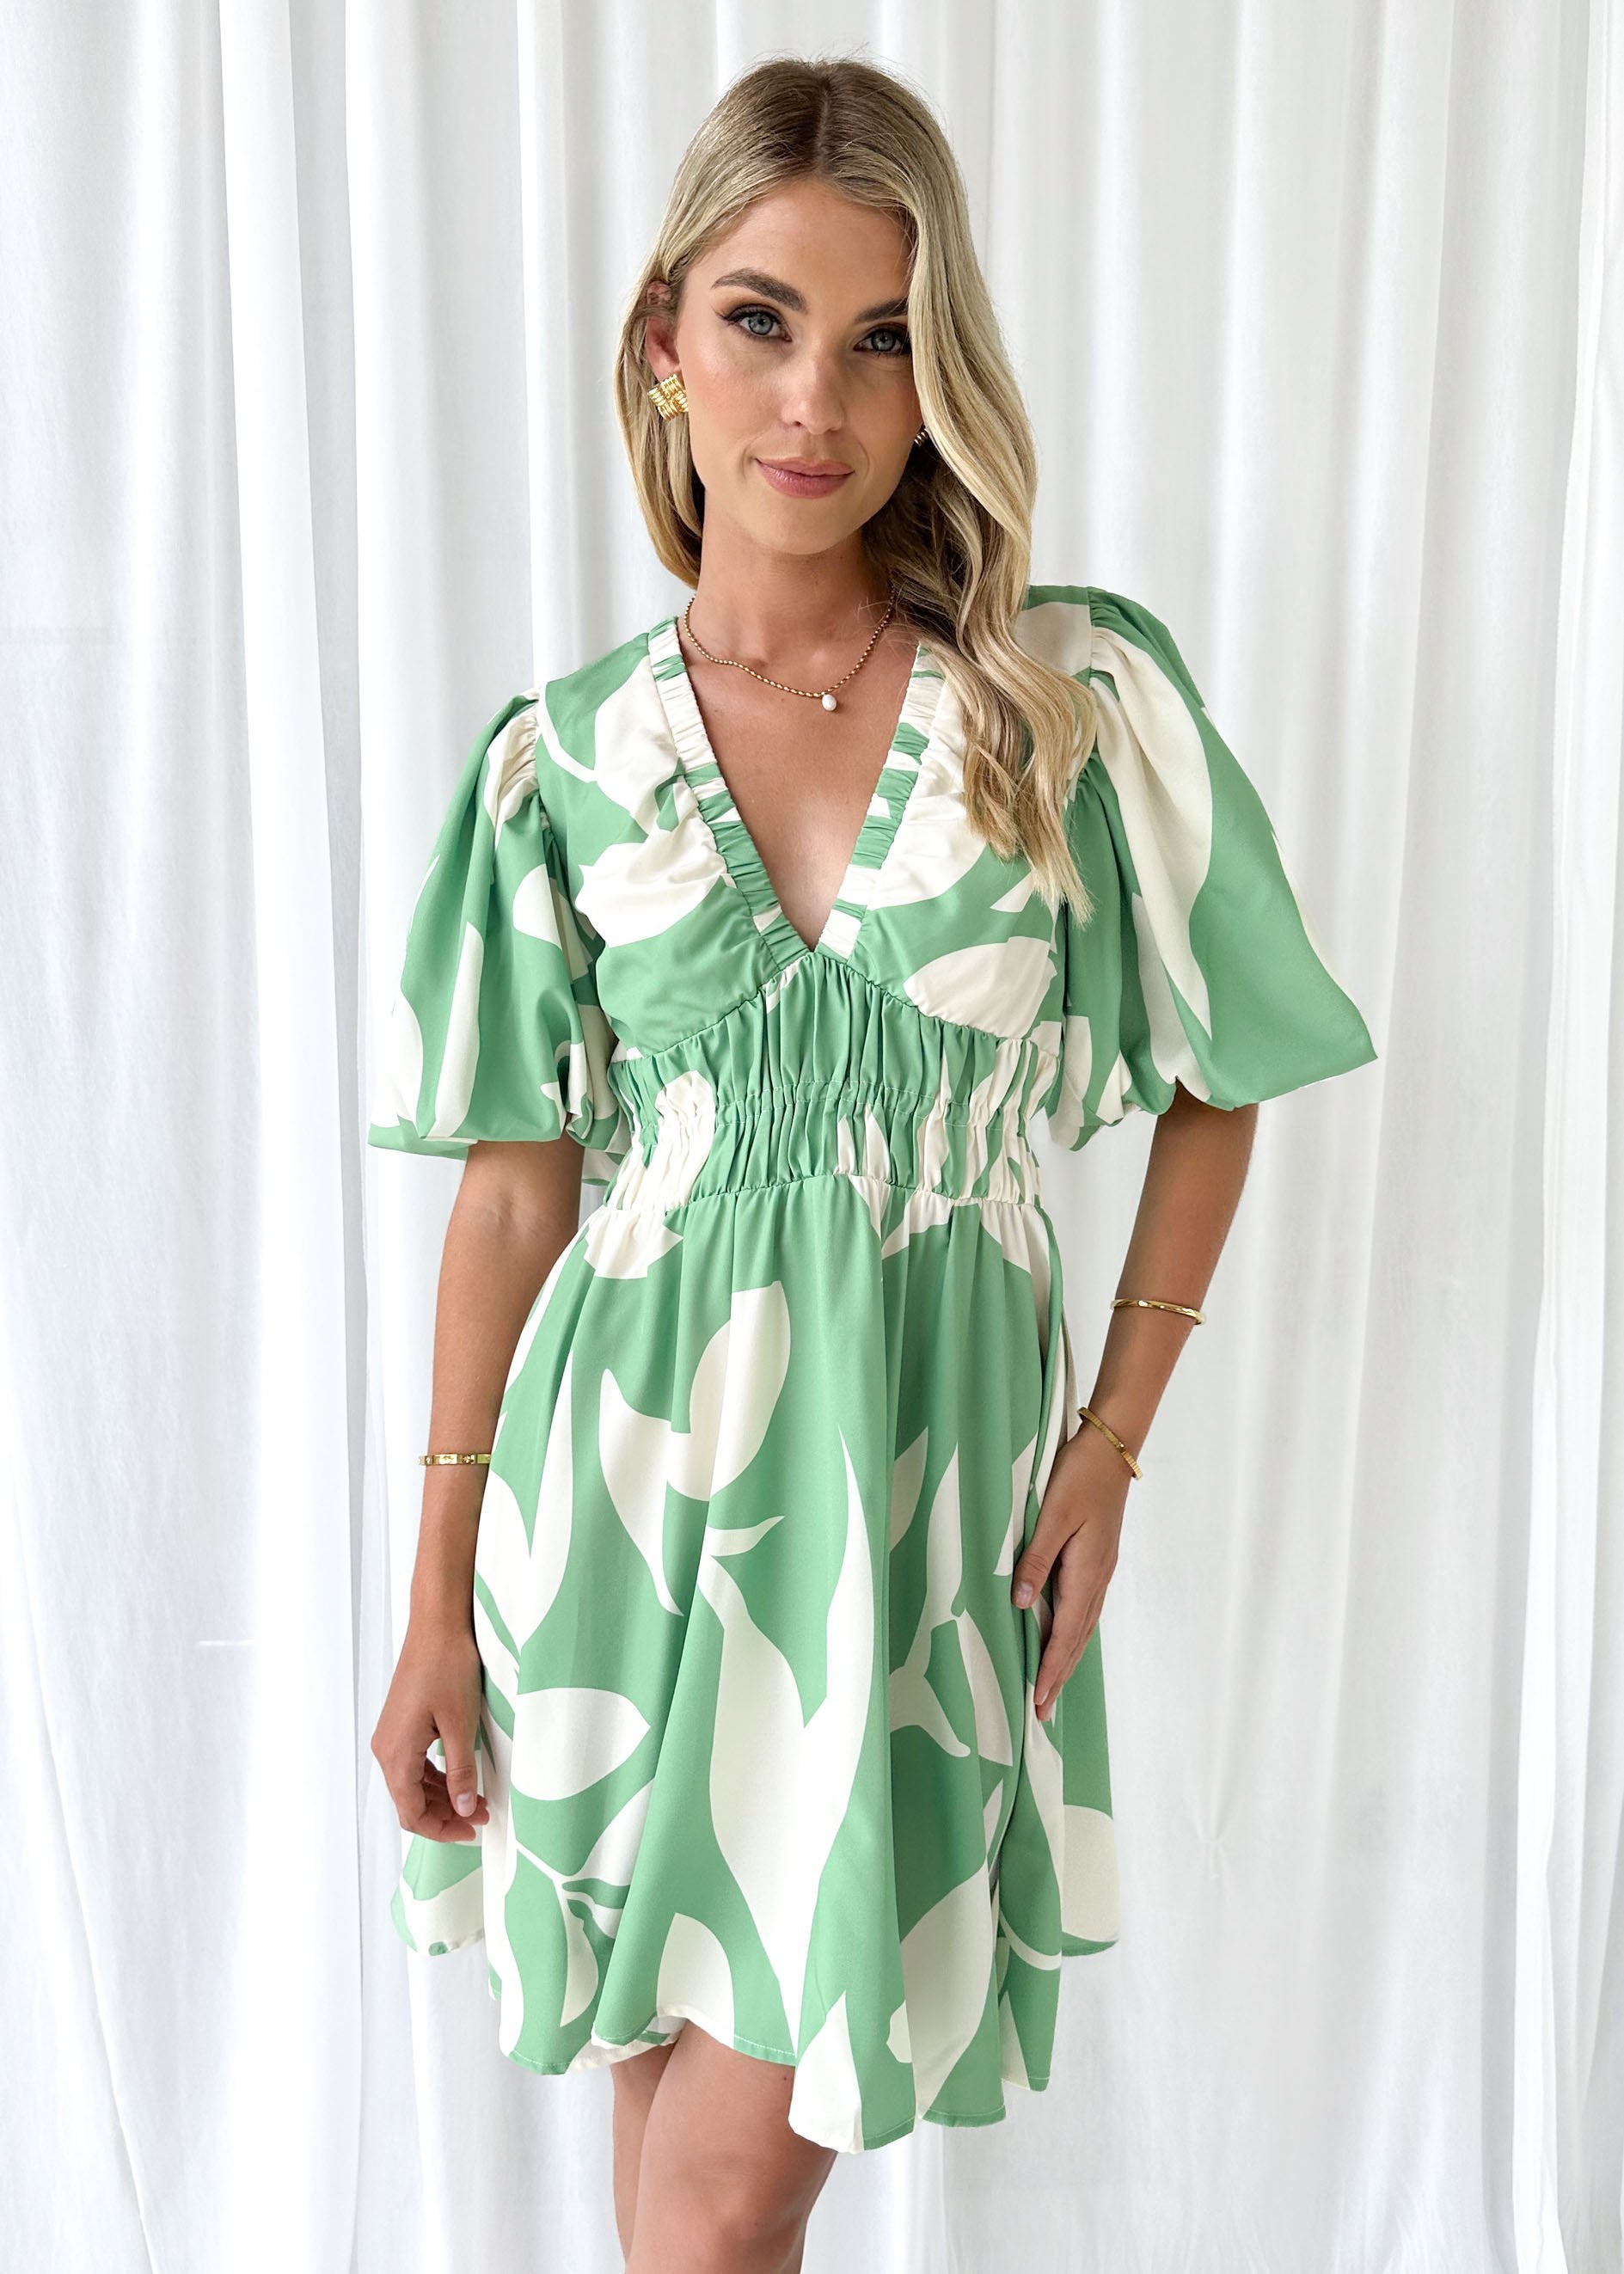 Twisoria Dress - Green Floral